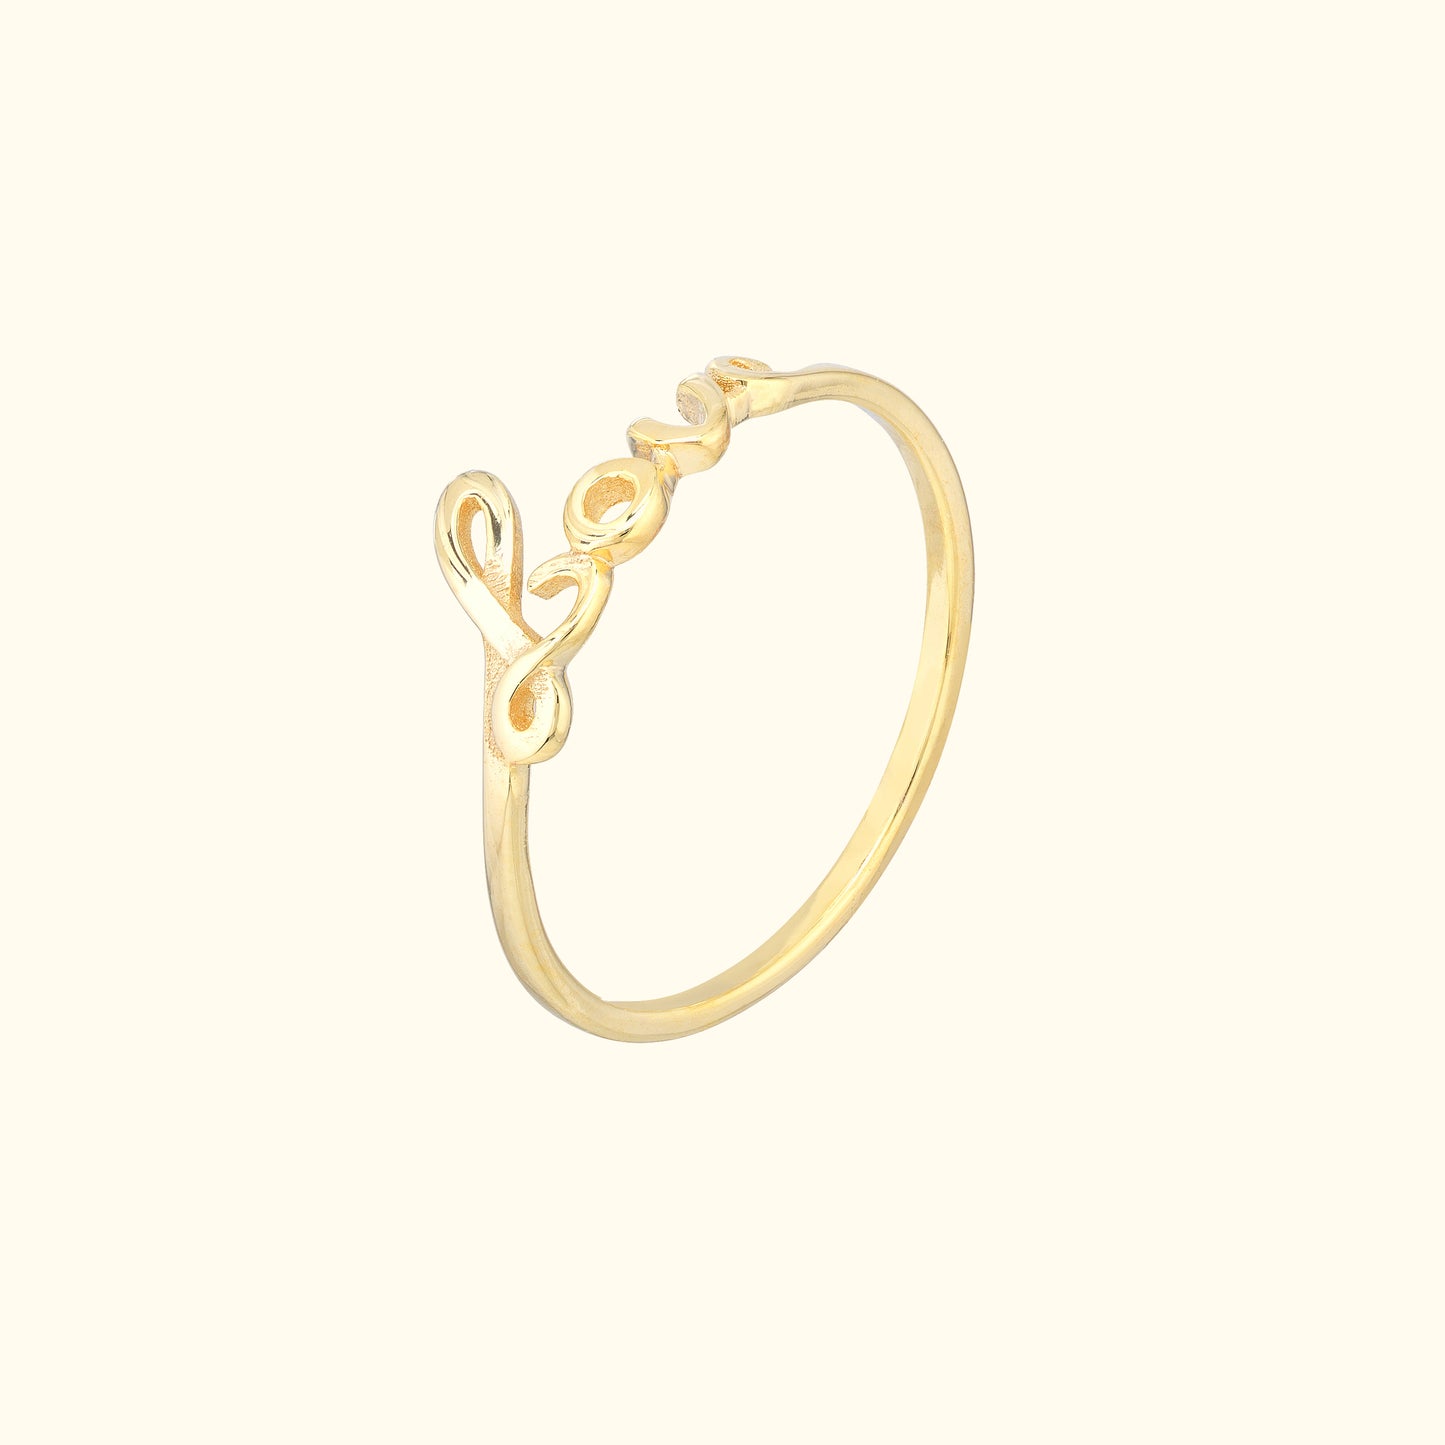 Cursive 'Love' Ring